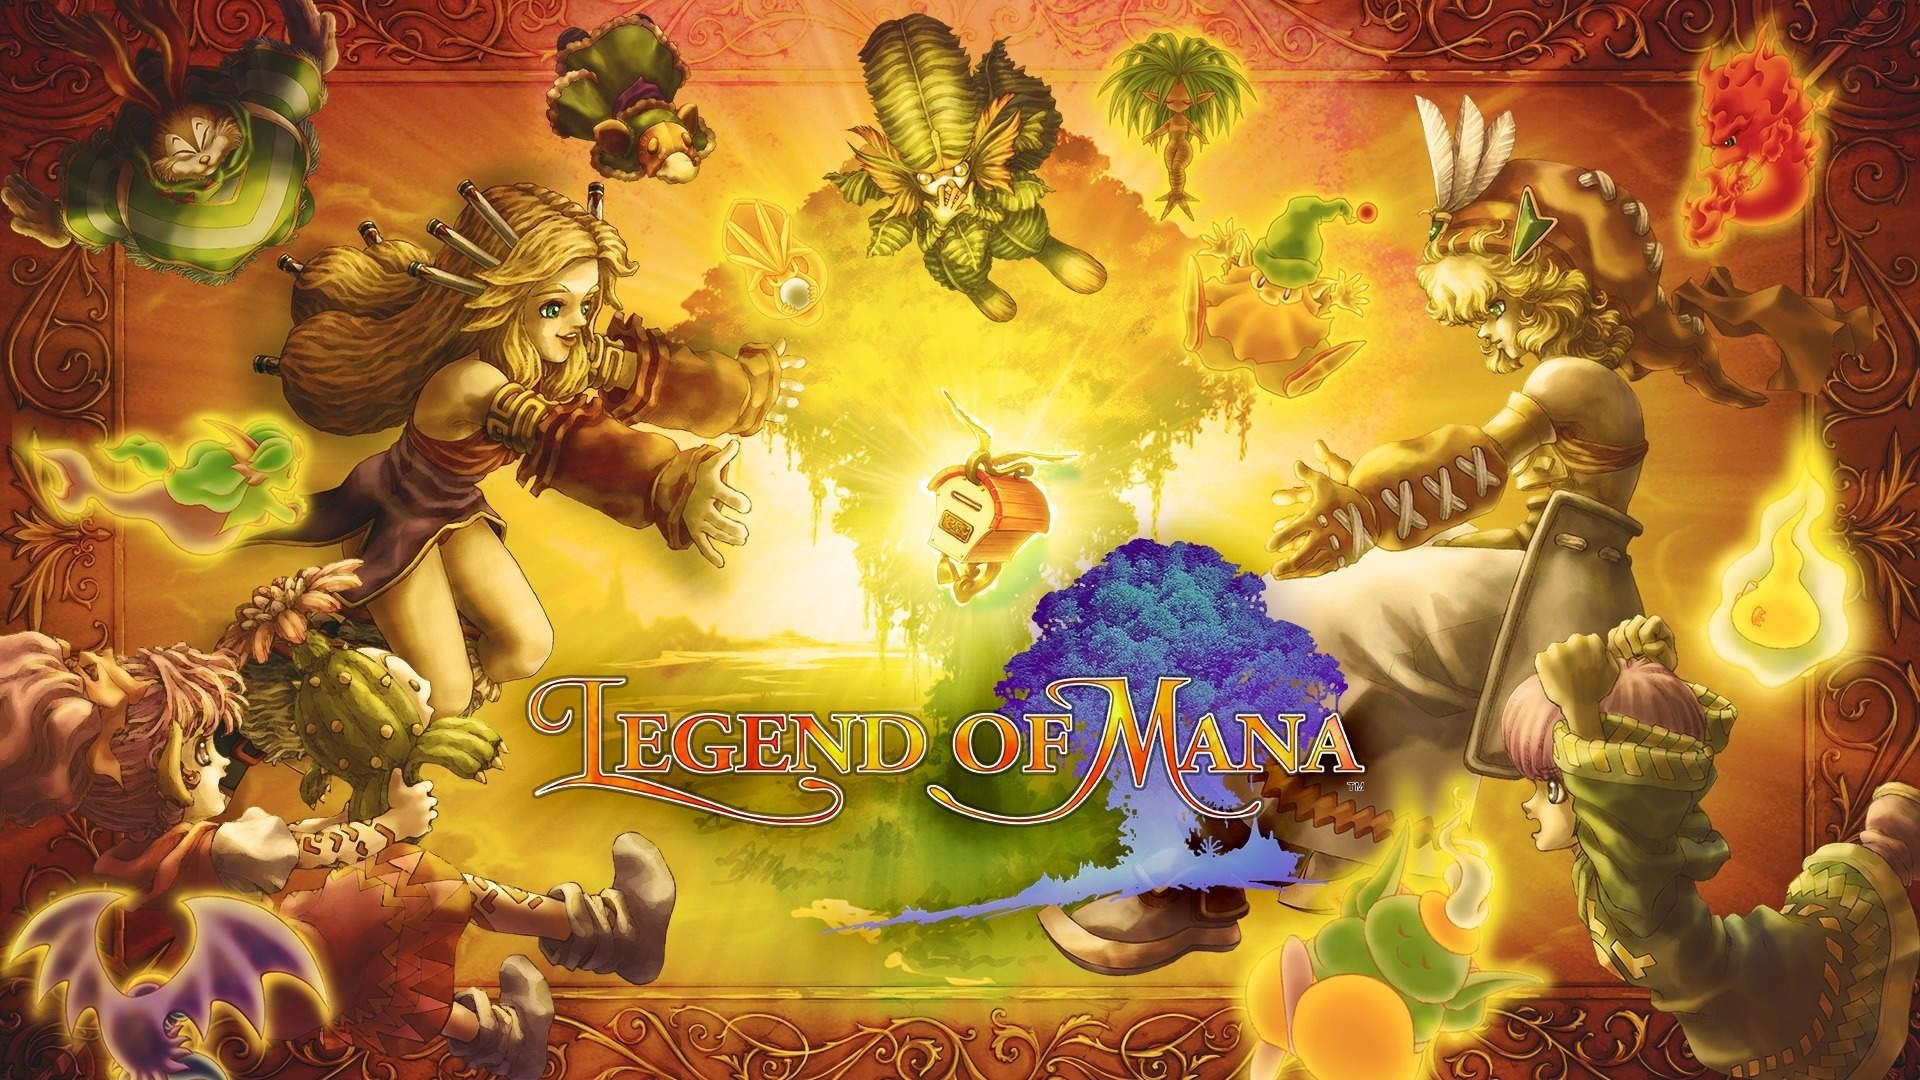 years of Mana: creators talk Legend of Mana. Square Enix Blog